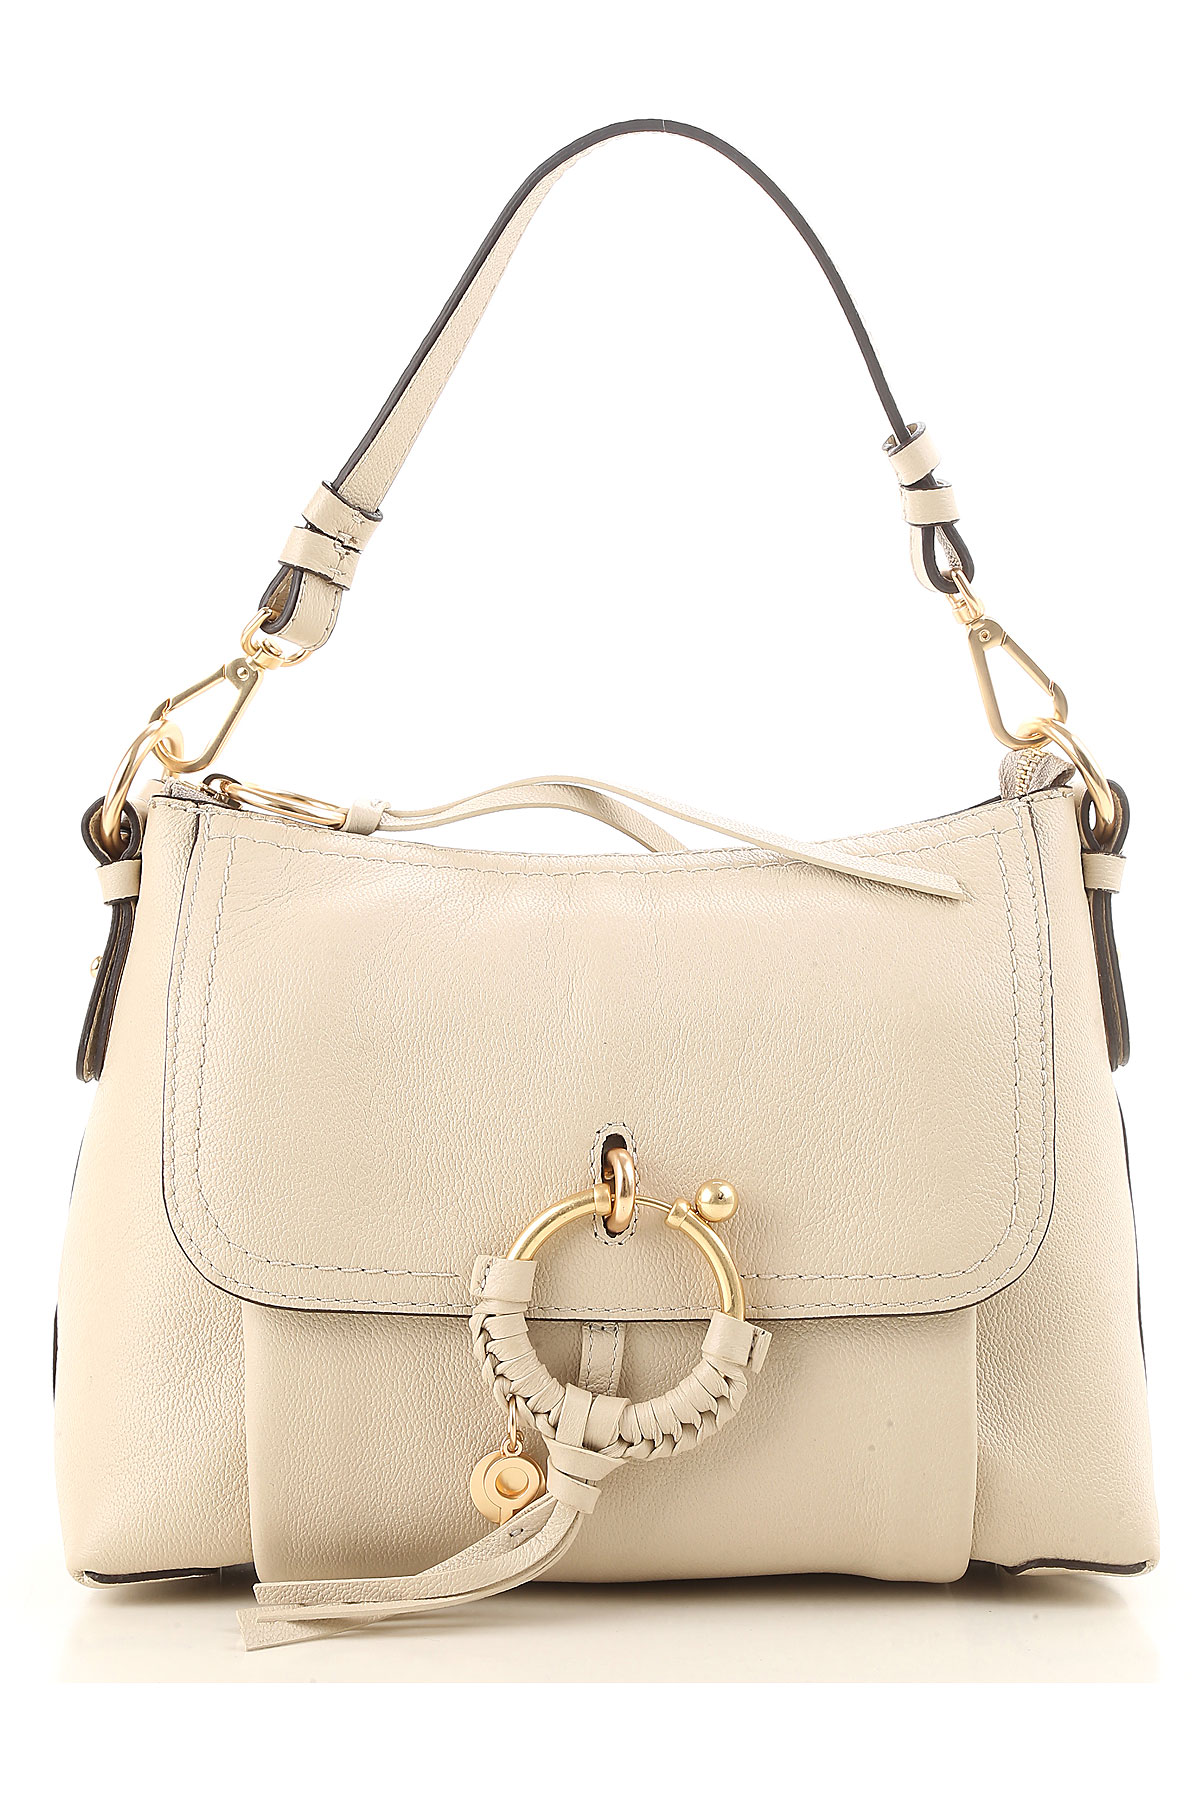 Handbags Chloe, Style code: chs18ss91038824h--